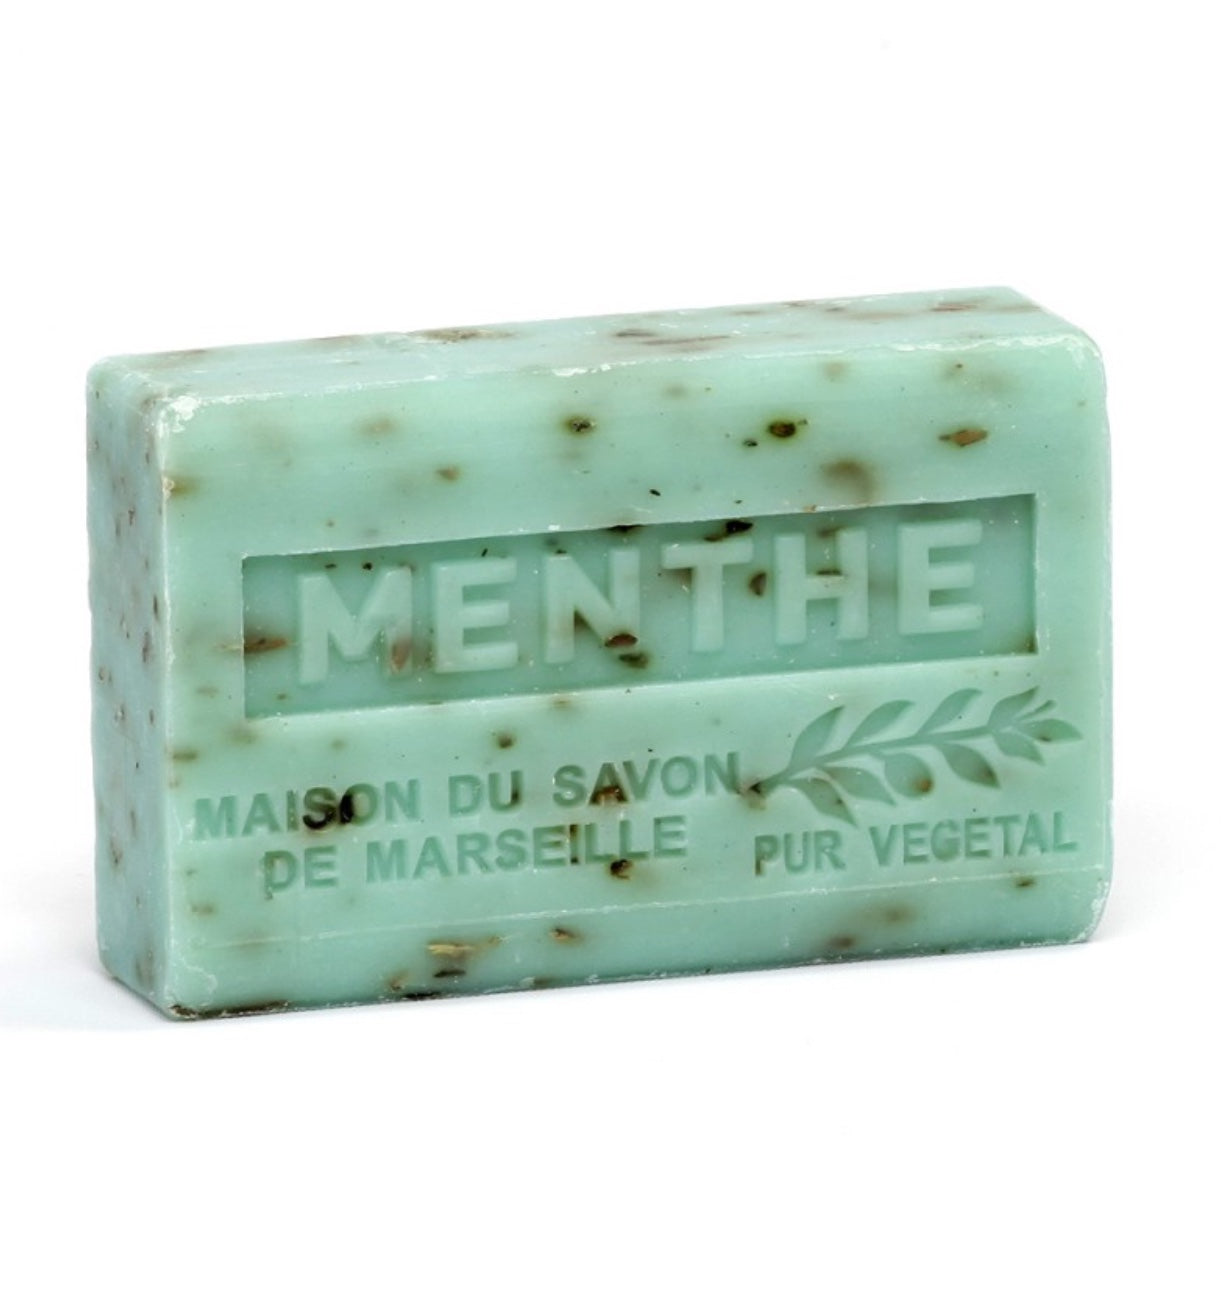 Shea Butter French soap